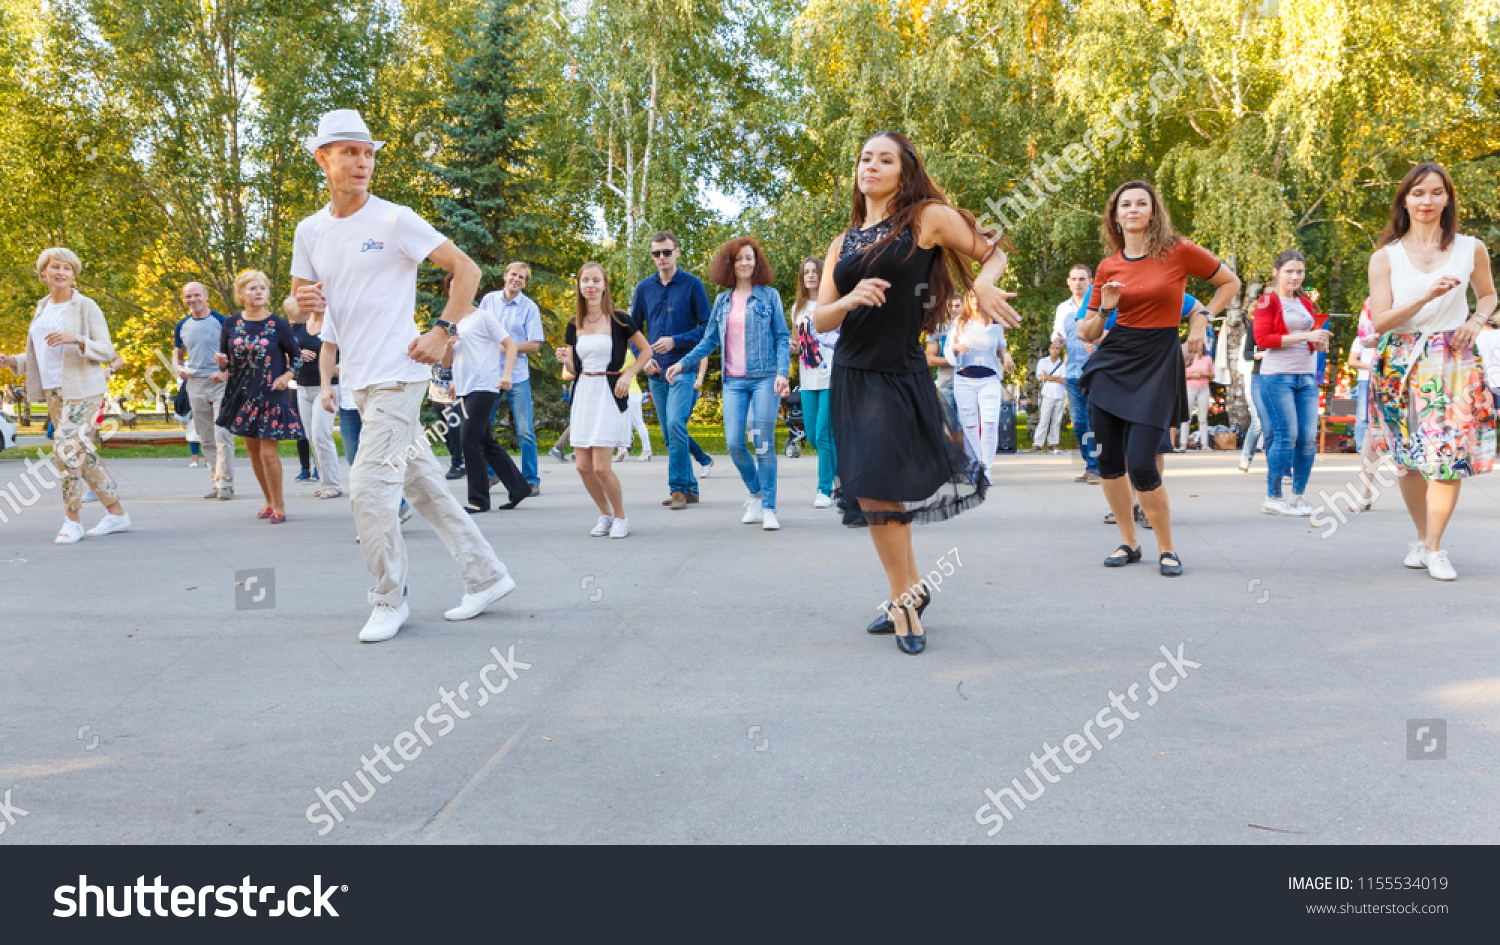 Russia Samara September 2017: Dancing at the festival "Dance Fair" in Gagarin Park #1155534019